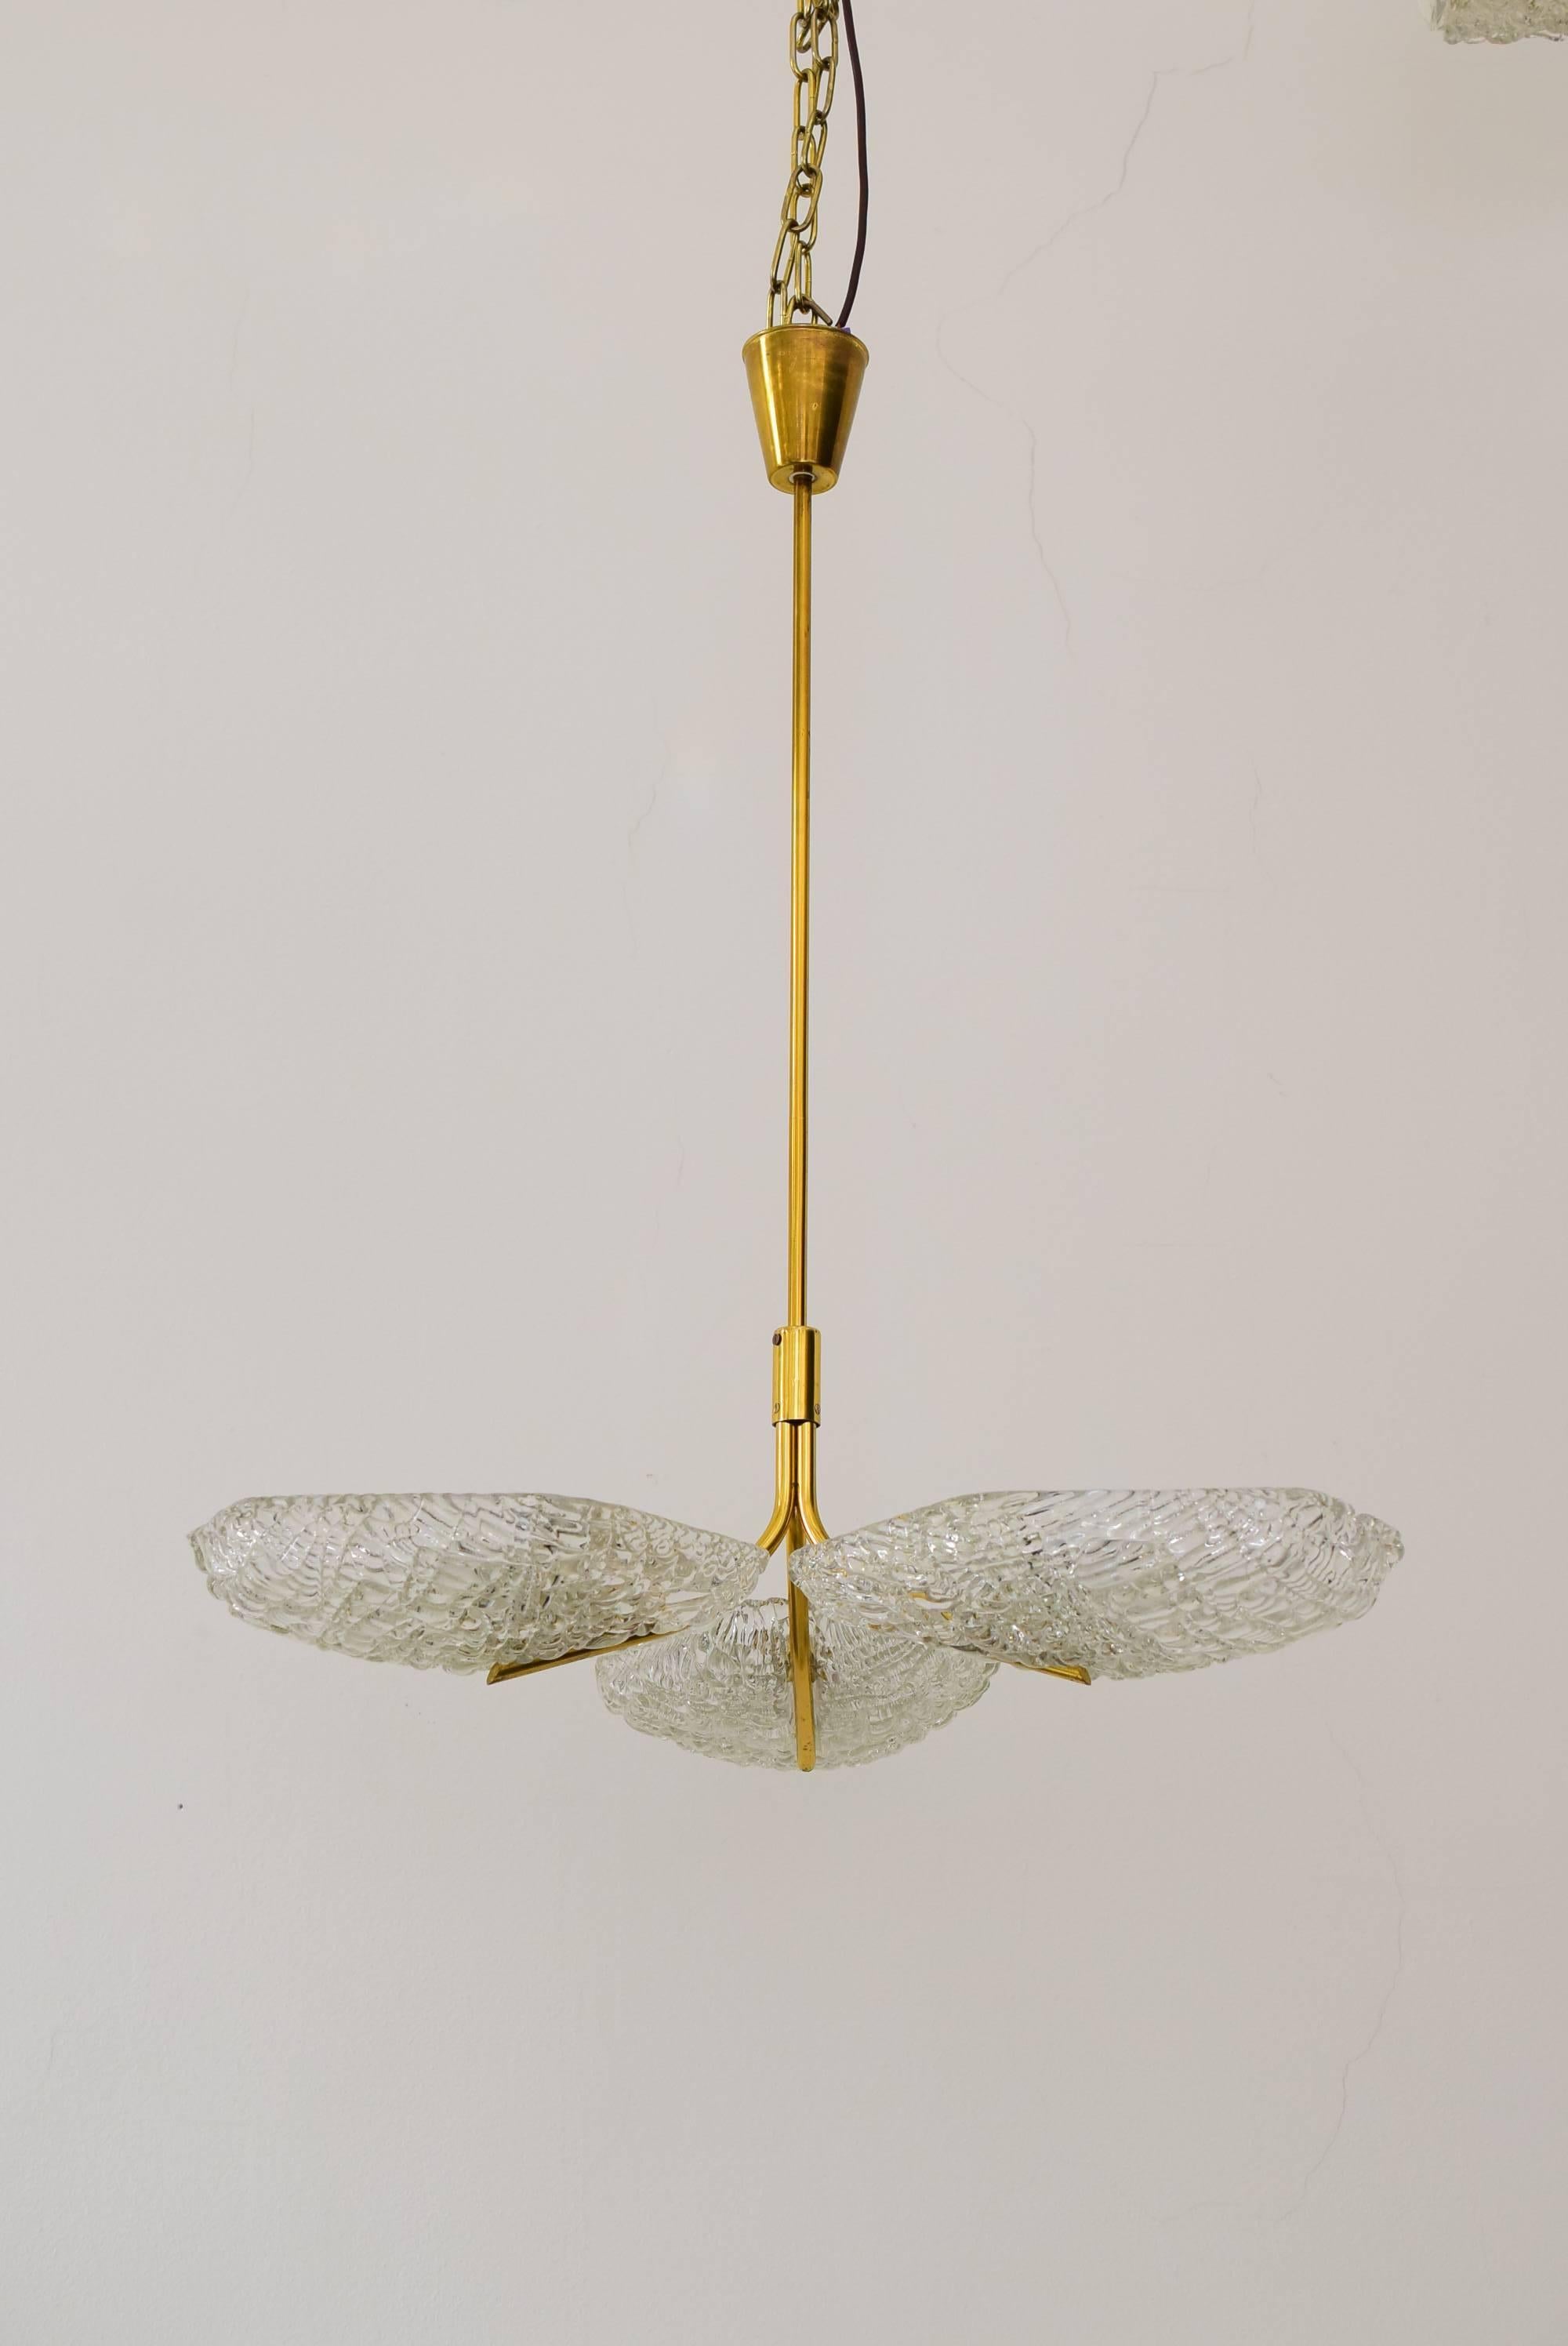 Beautiful chandelier by kalmar glass and brass.

Original condition.